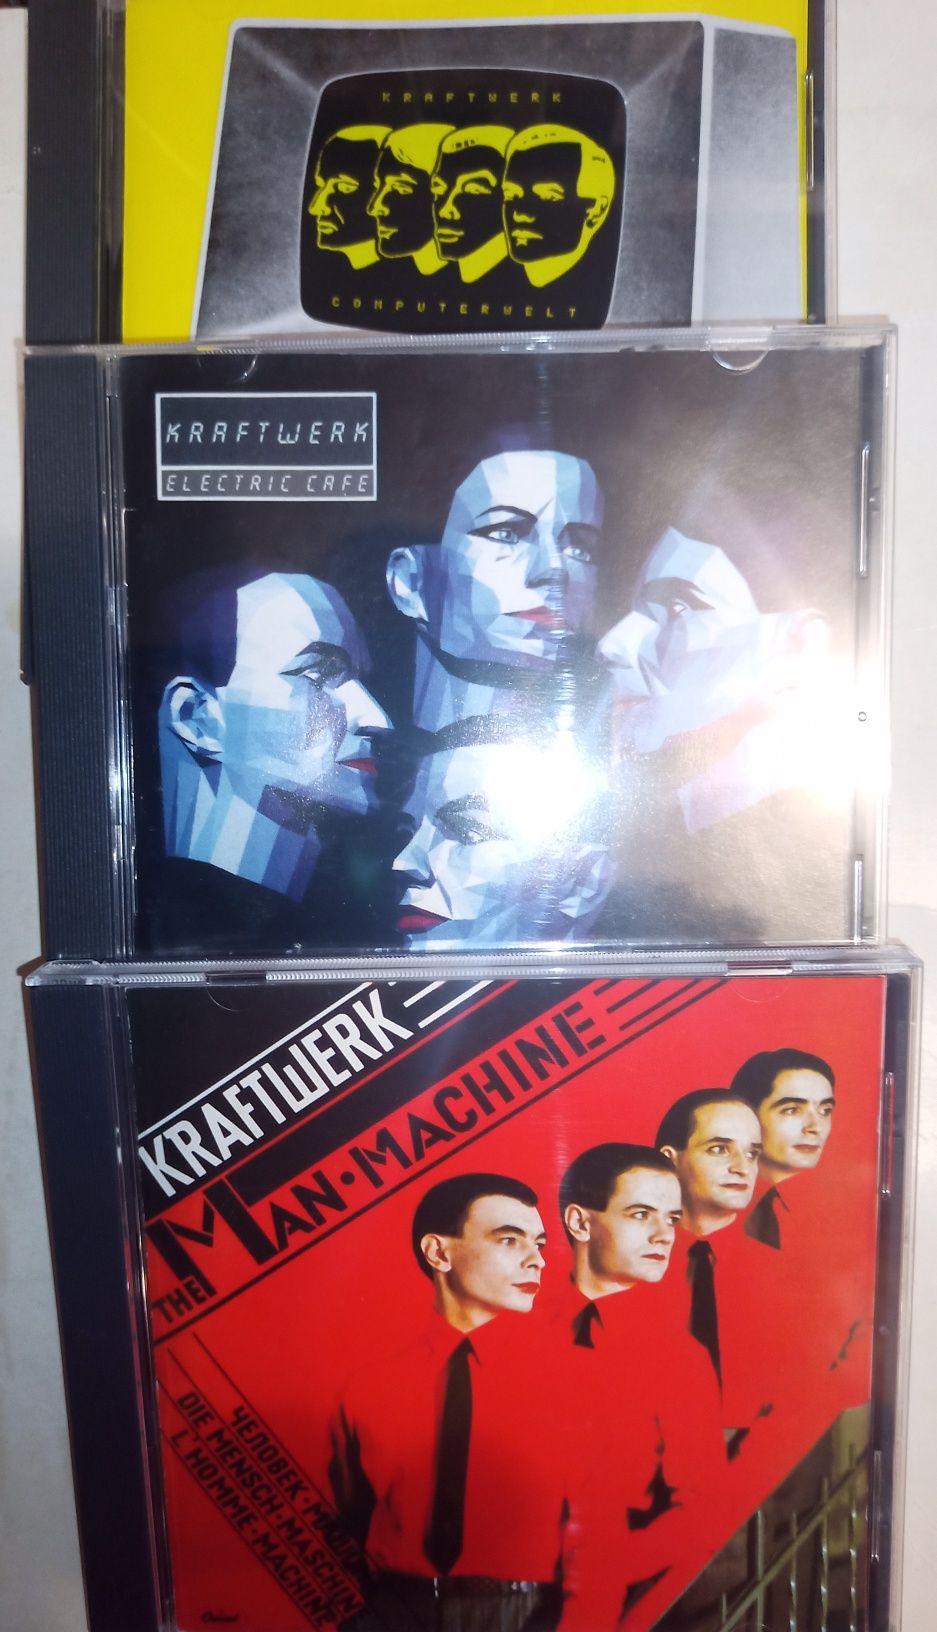 Kraftwerk. Karl Bartos. Yello. Фірмові CD.